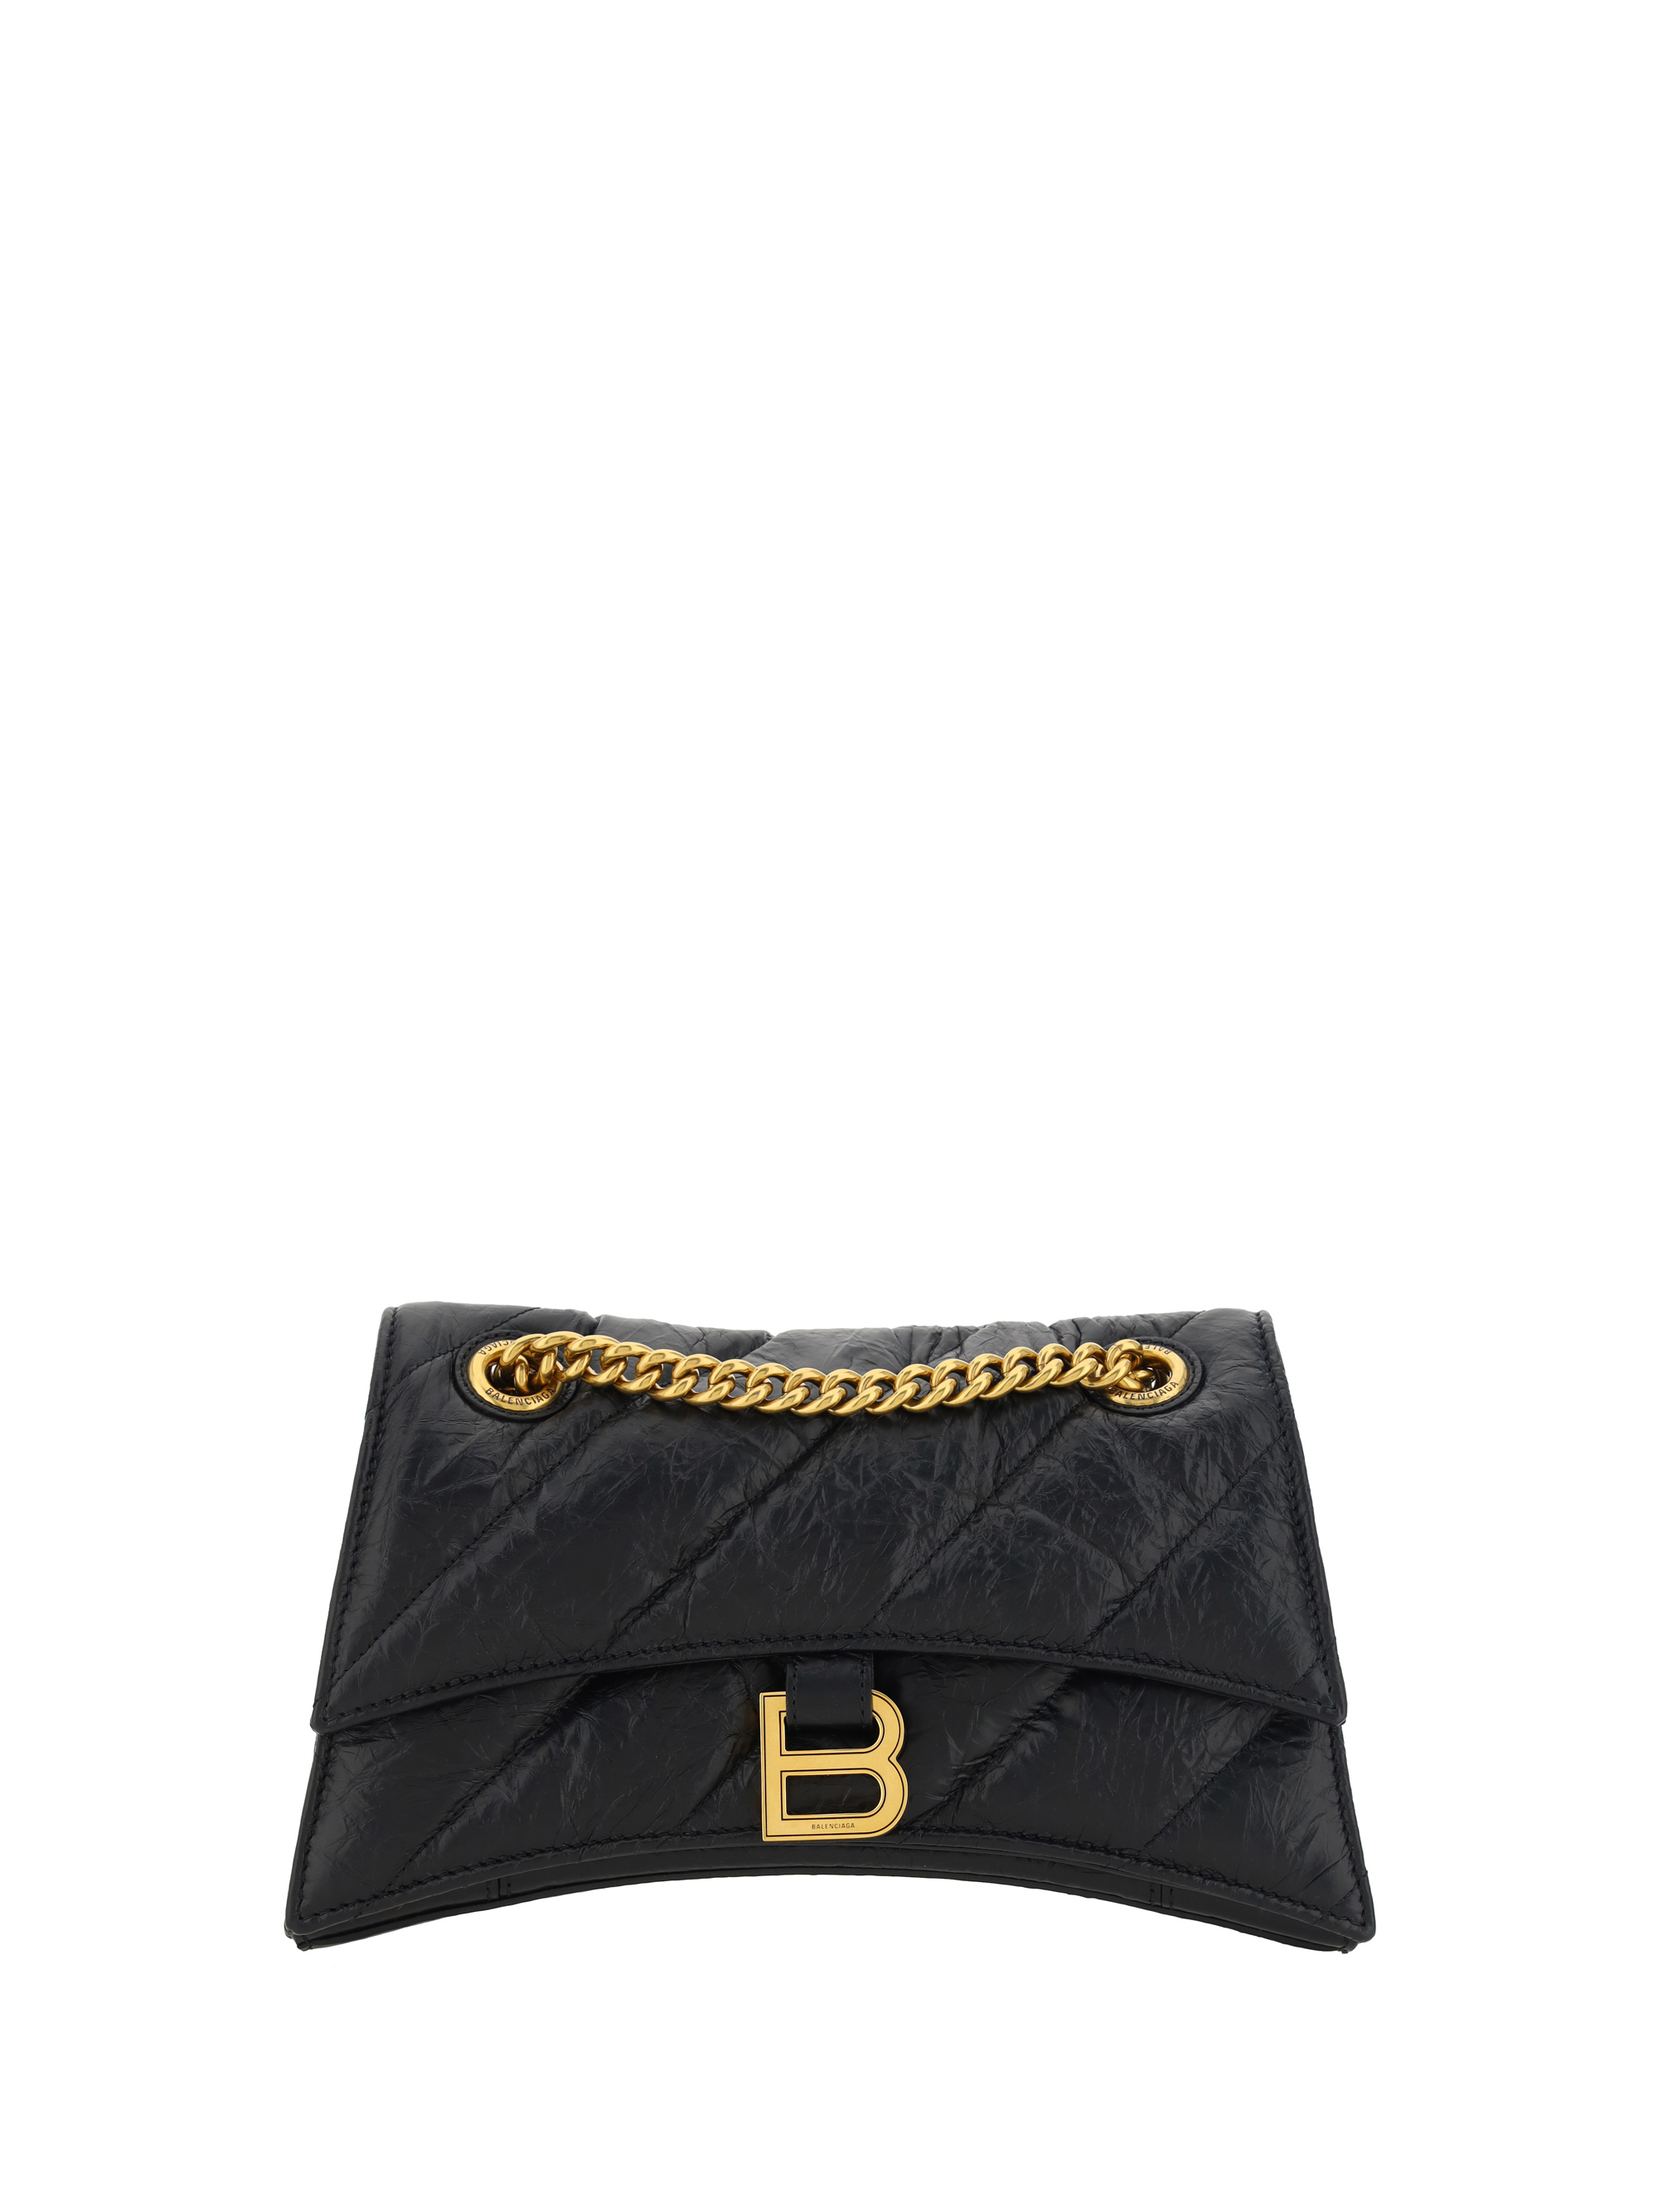 Balenciaga Bb Quilted Crossbody Bag in Black